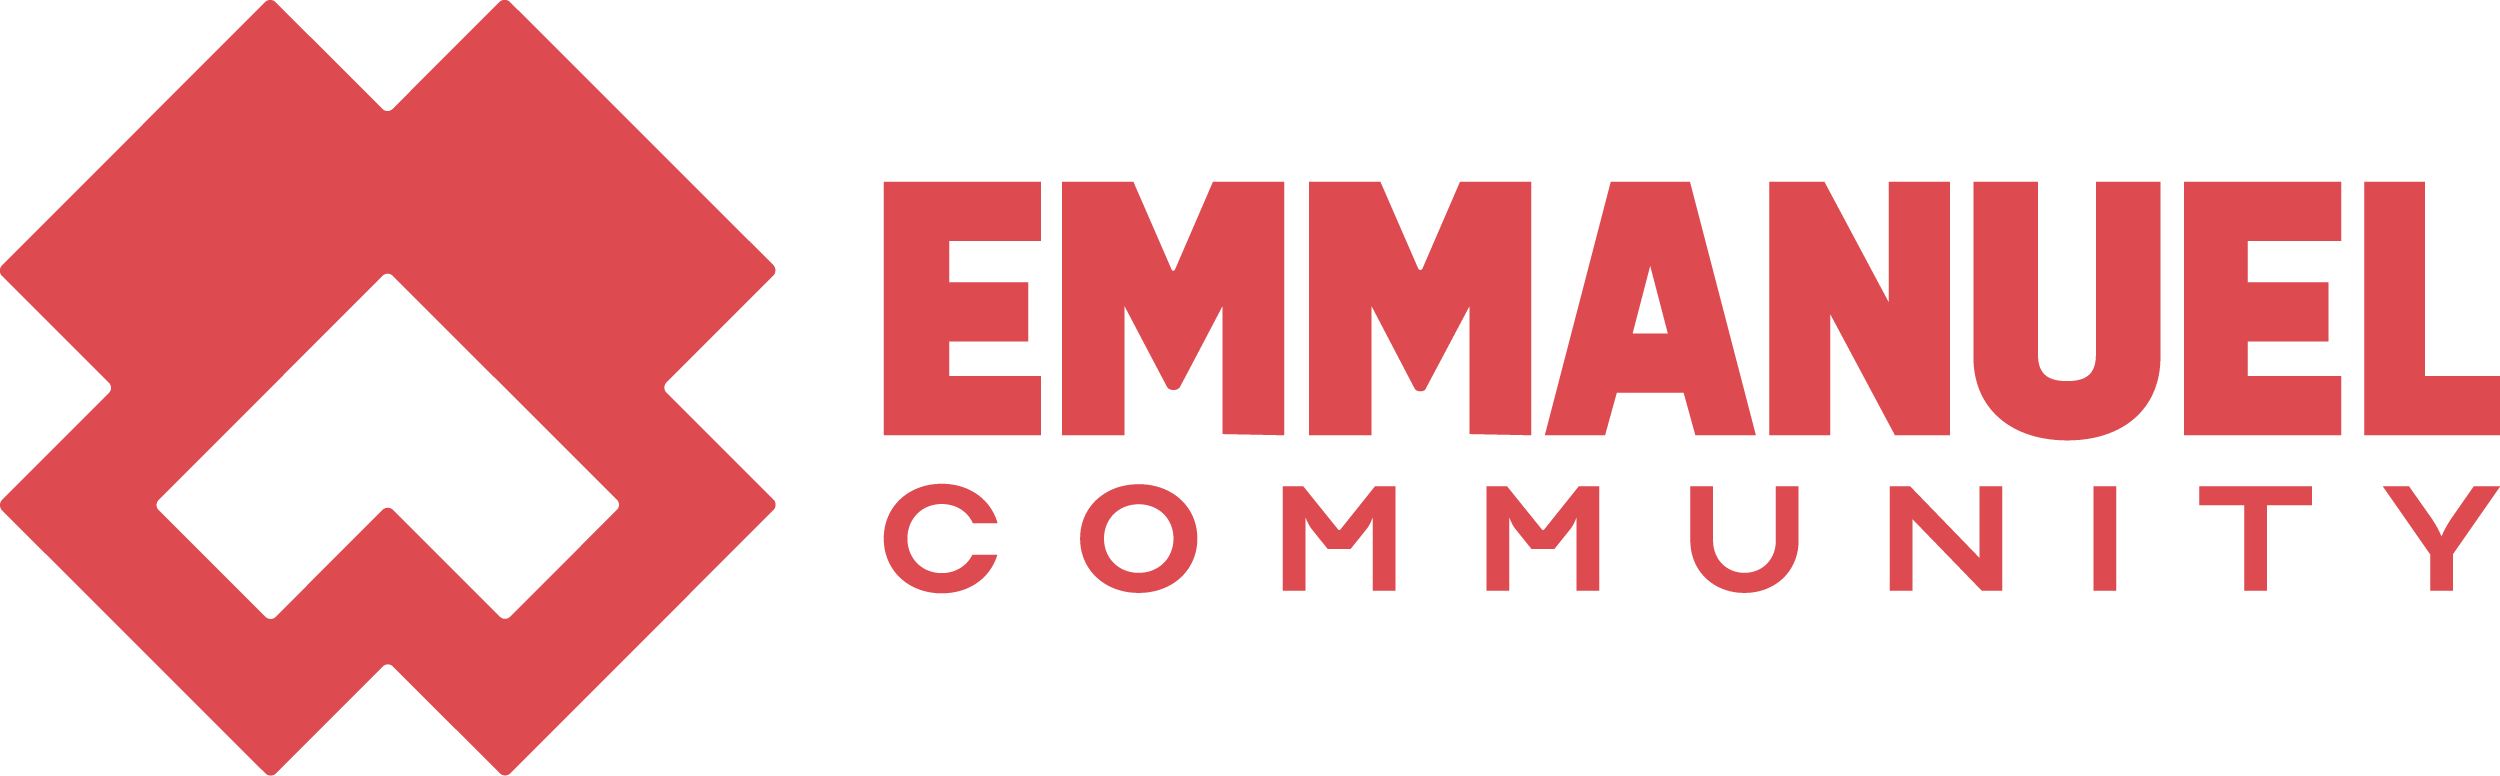 Emmanuel Community